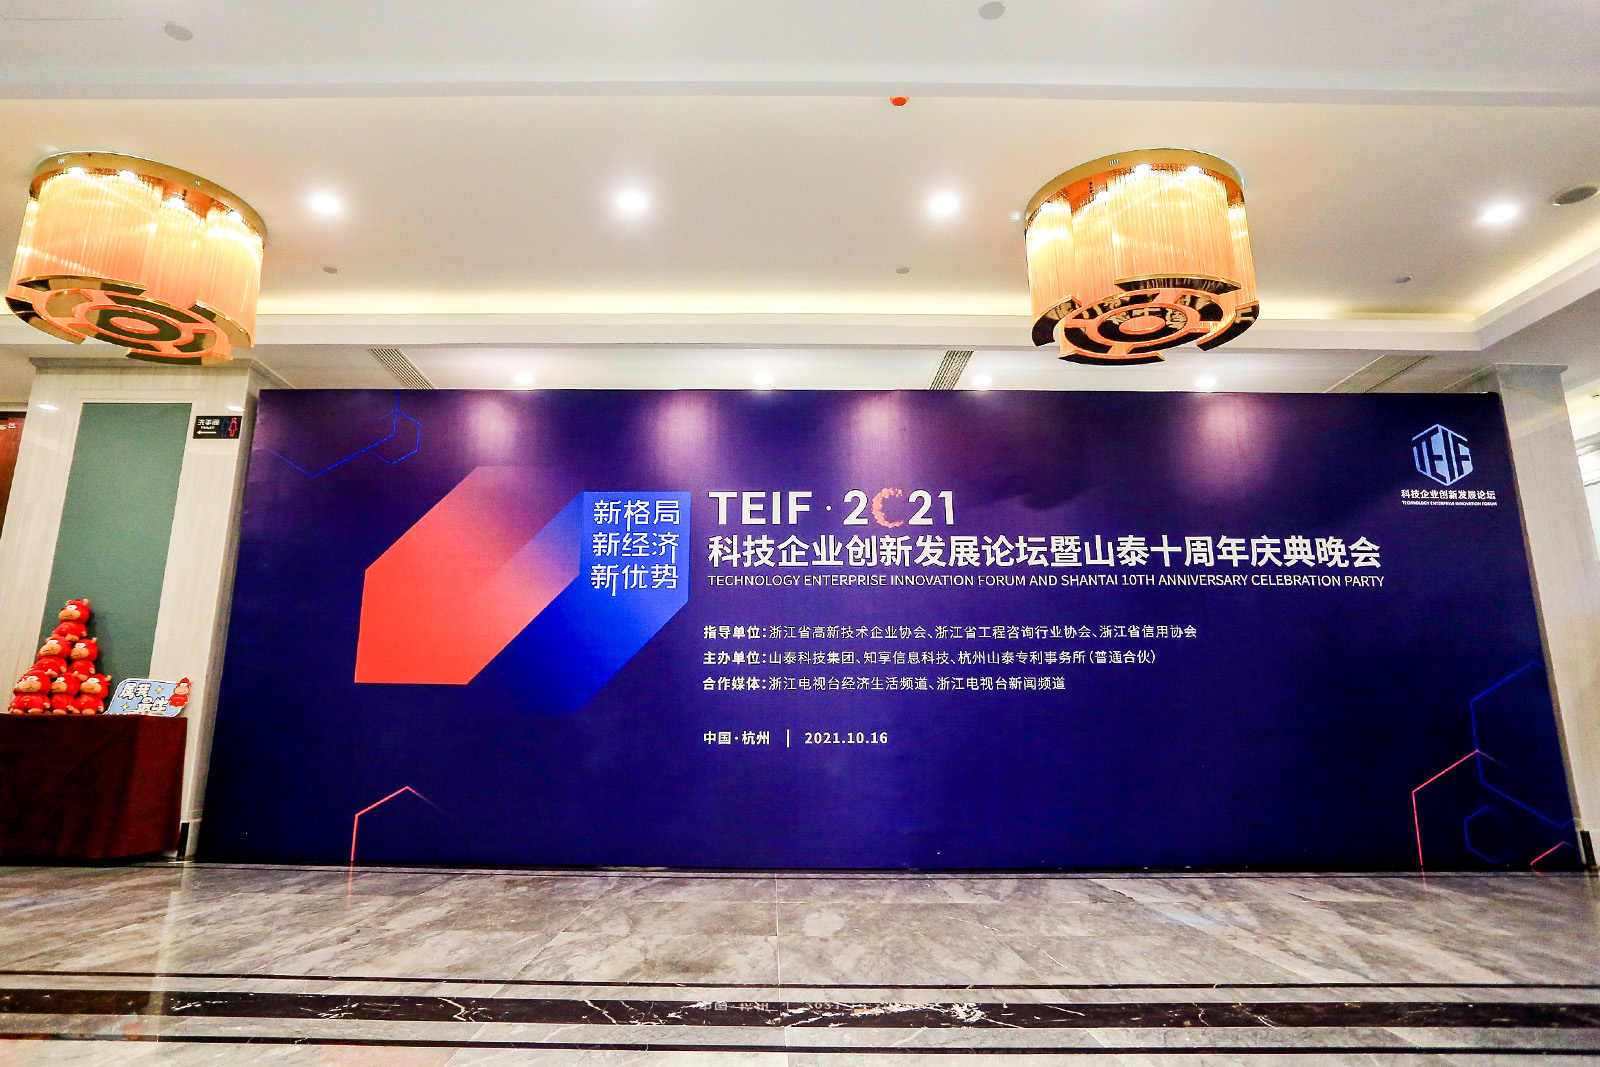 TEIF 2021科技企业创新发展论坛暨山泰十周年庆典晚会外场签到墙